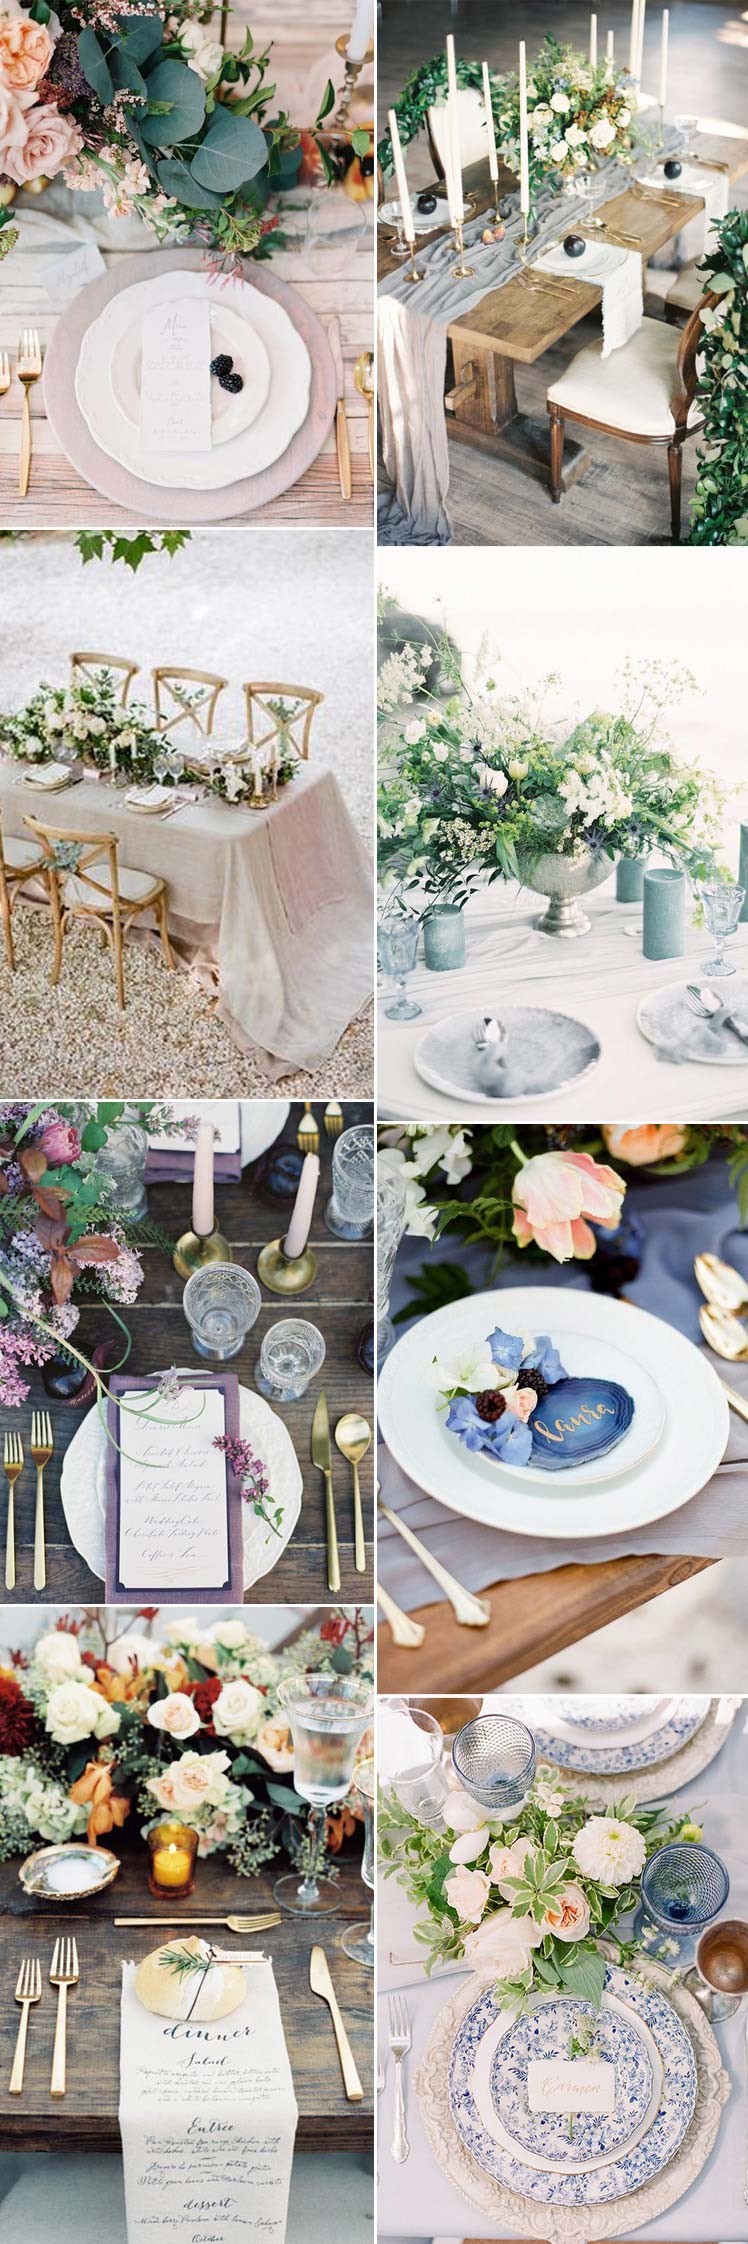 Beautiful wedding tablescape ideas